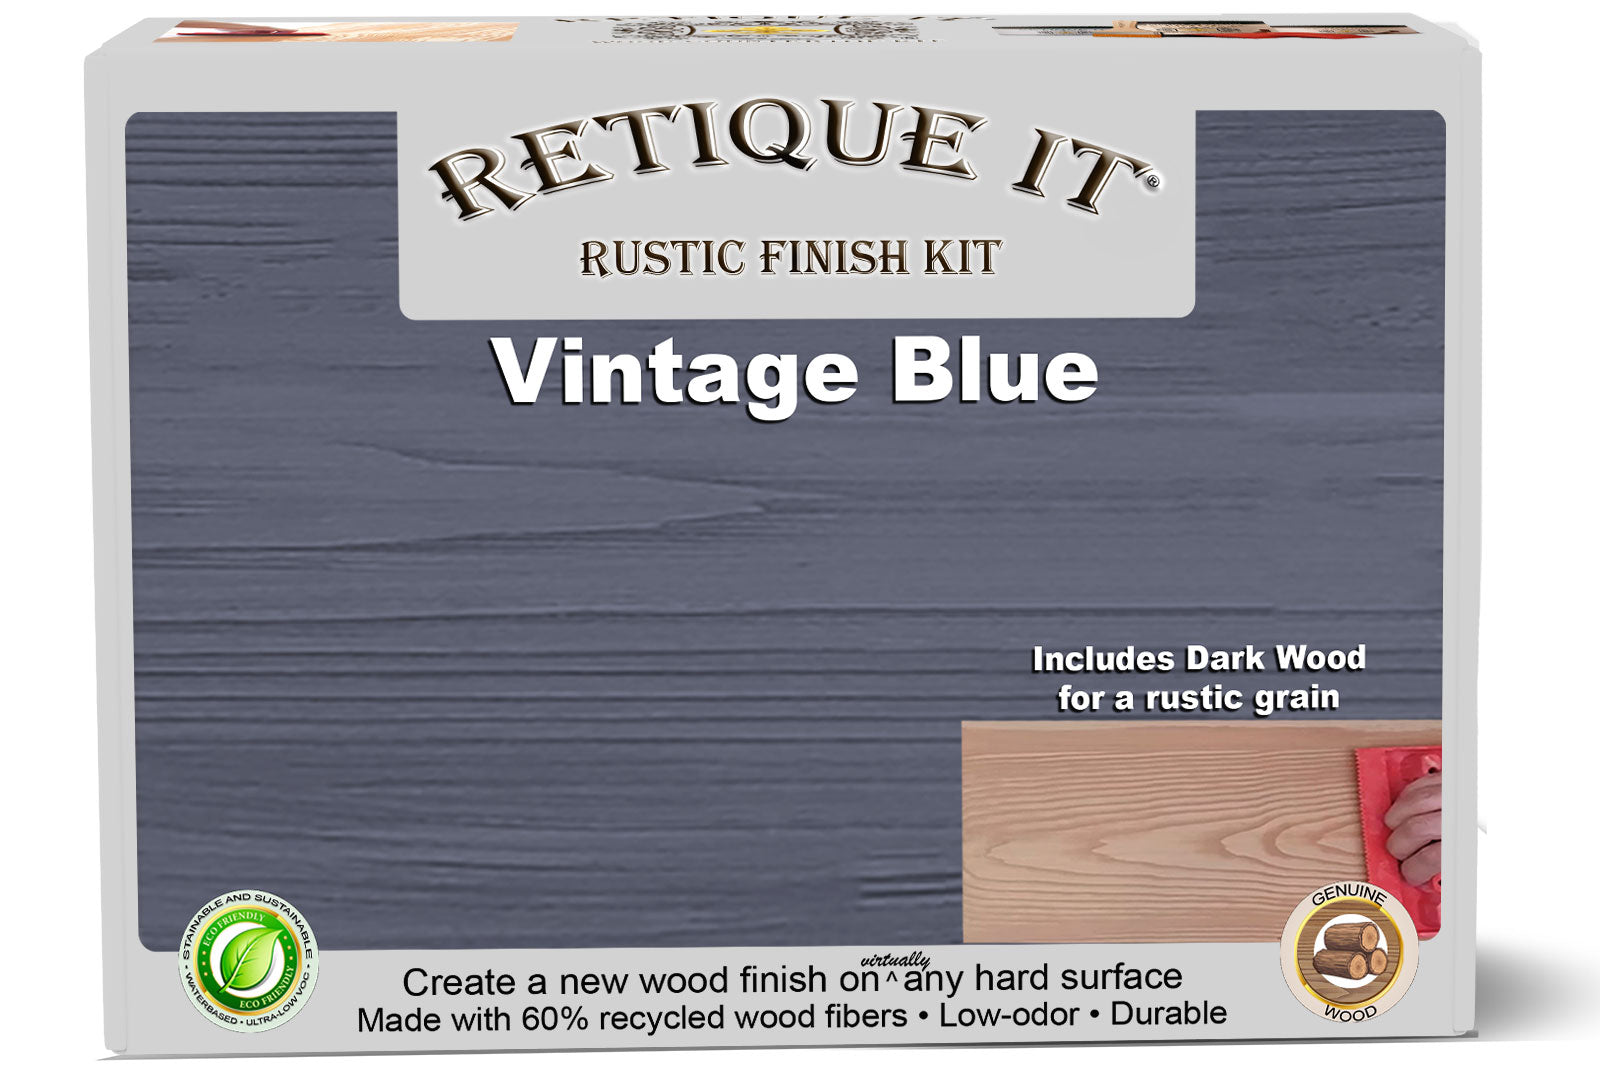 Rustic Finish Kit - Vintage Blue